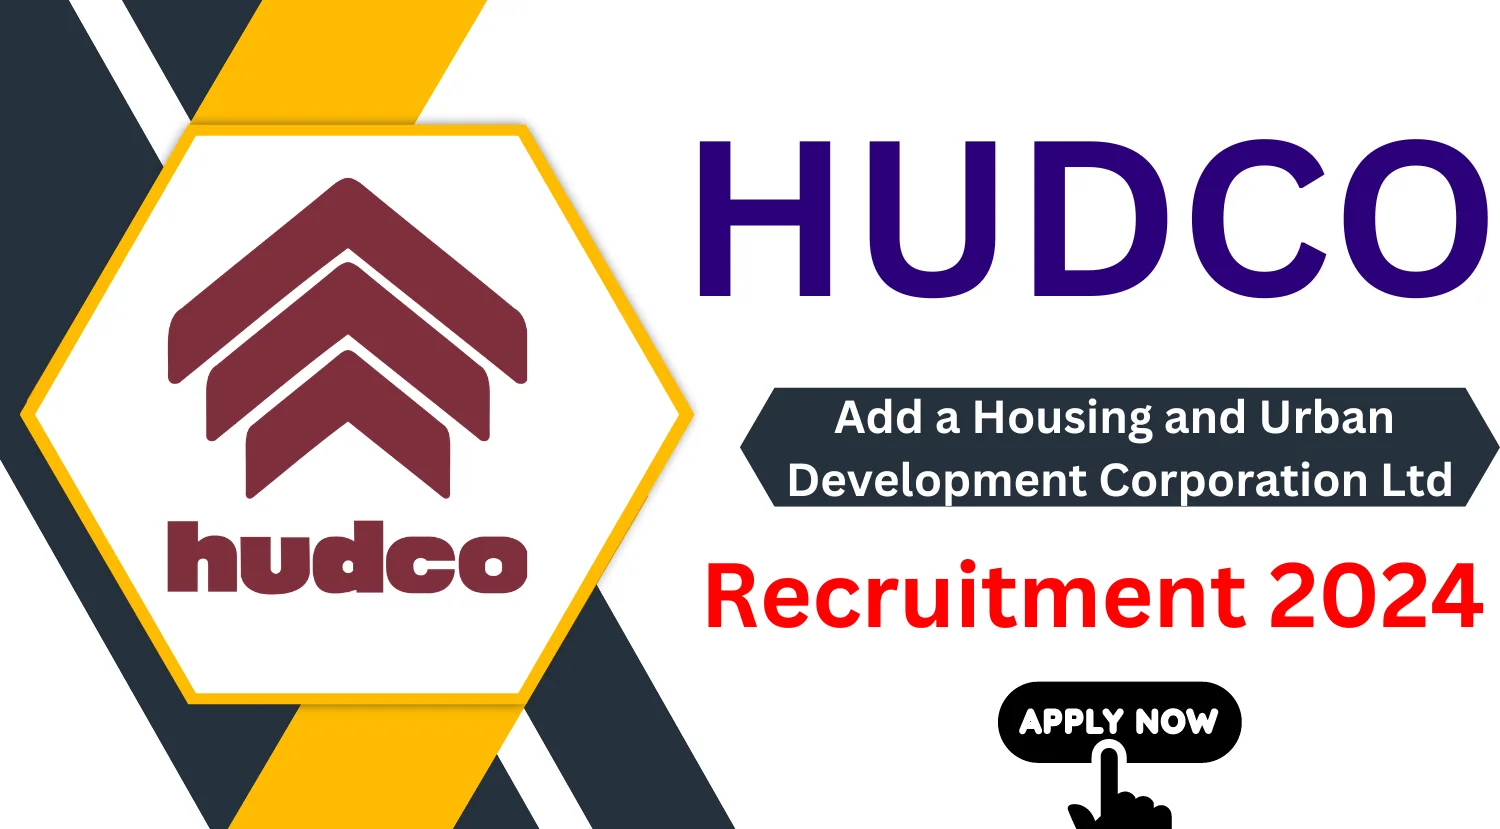 HUDCO Recruitment 2024